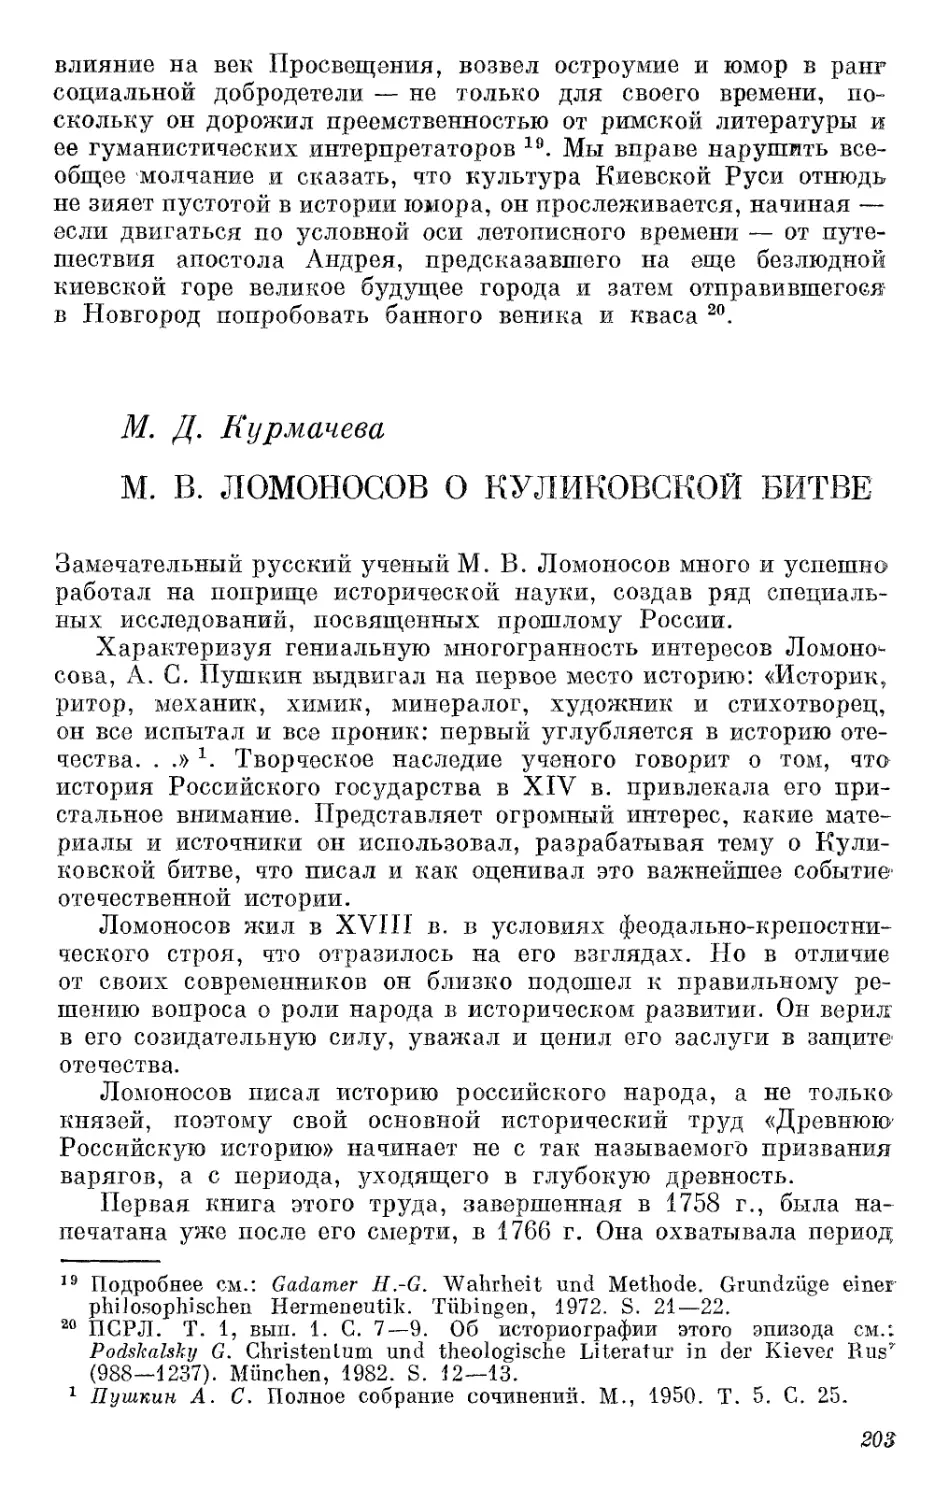 Курмачева М.Д. М.В. Ломоносов о Куликовской битве